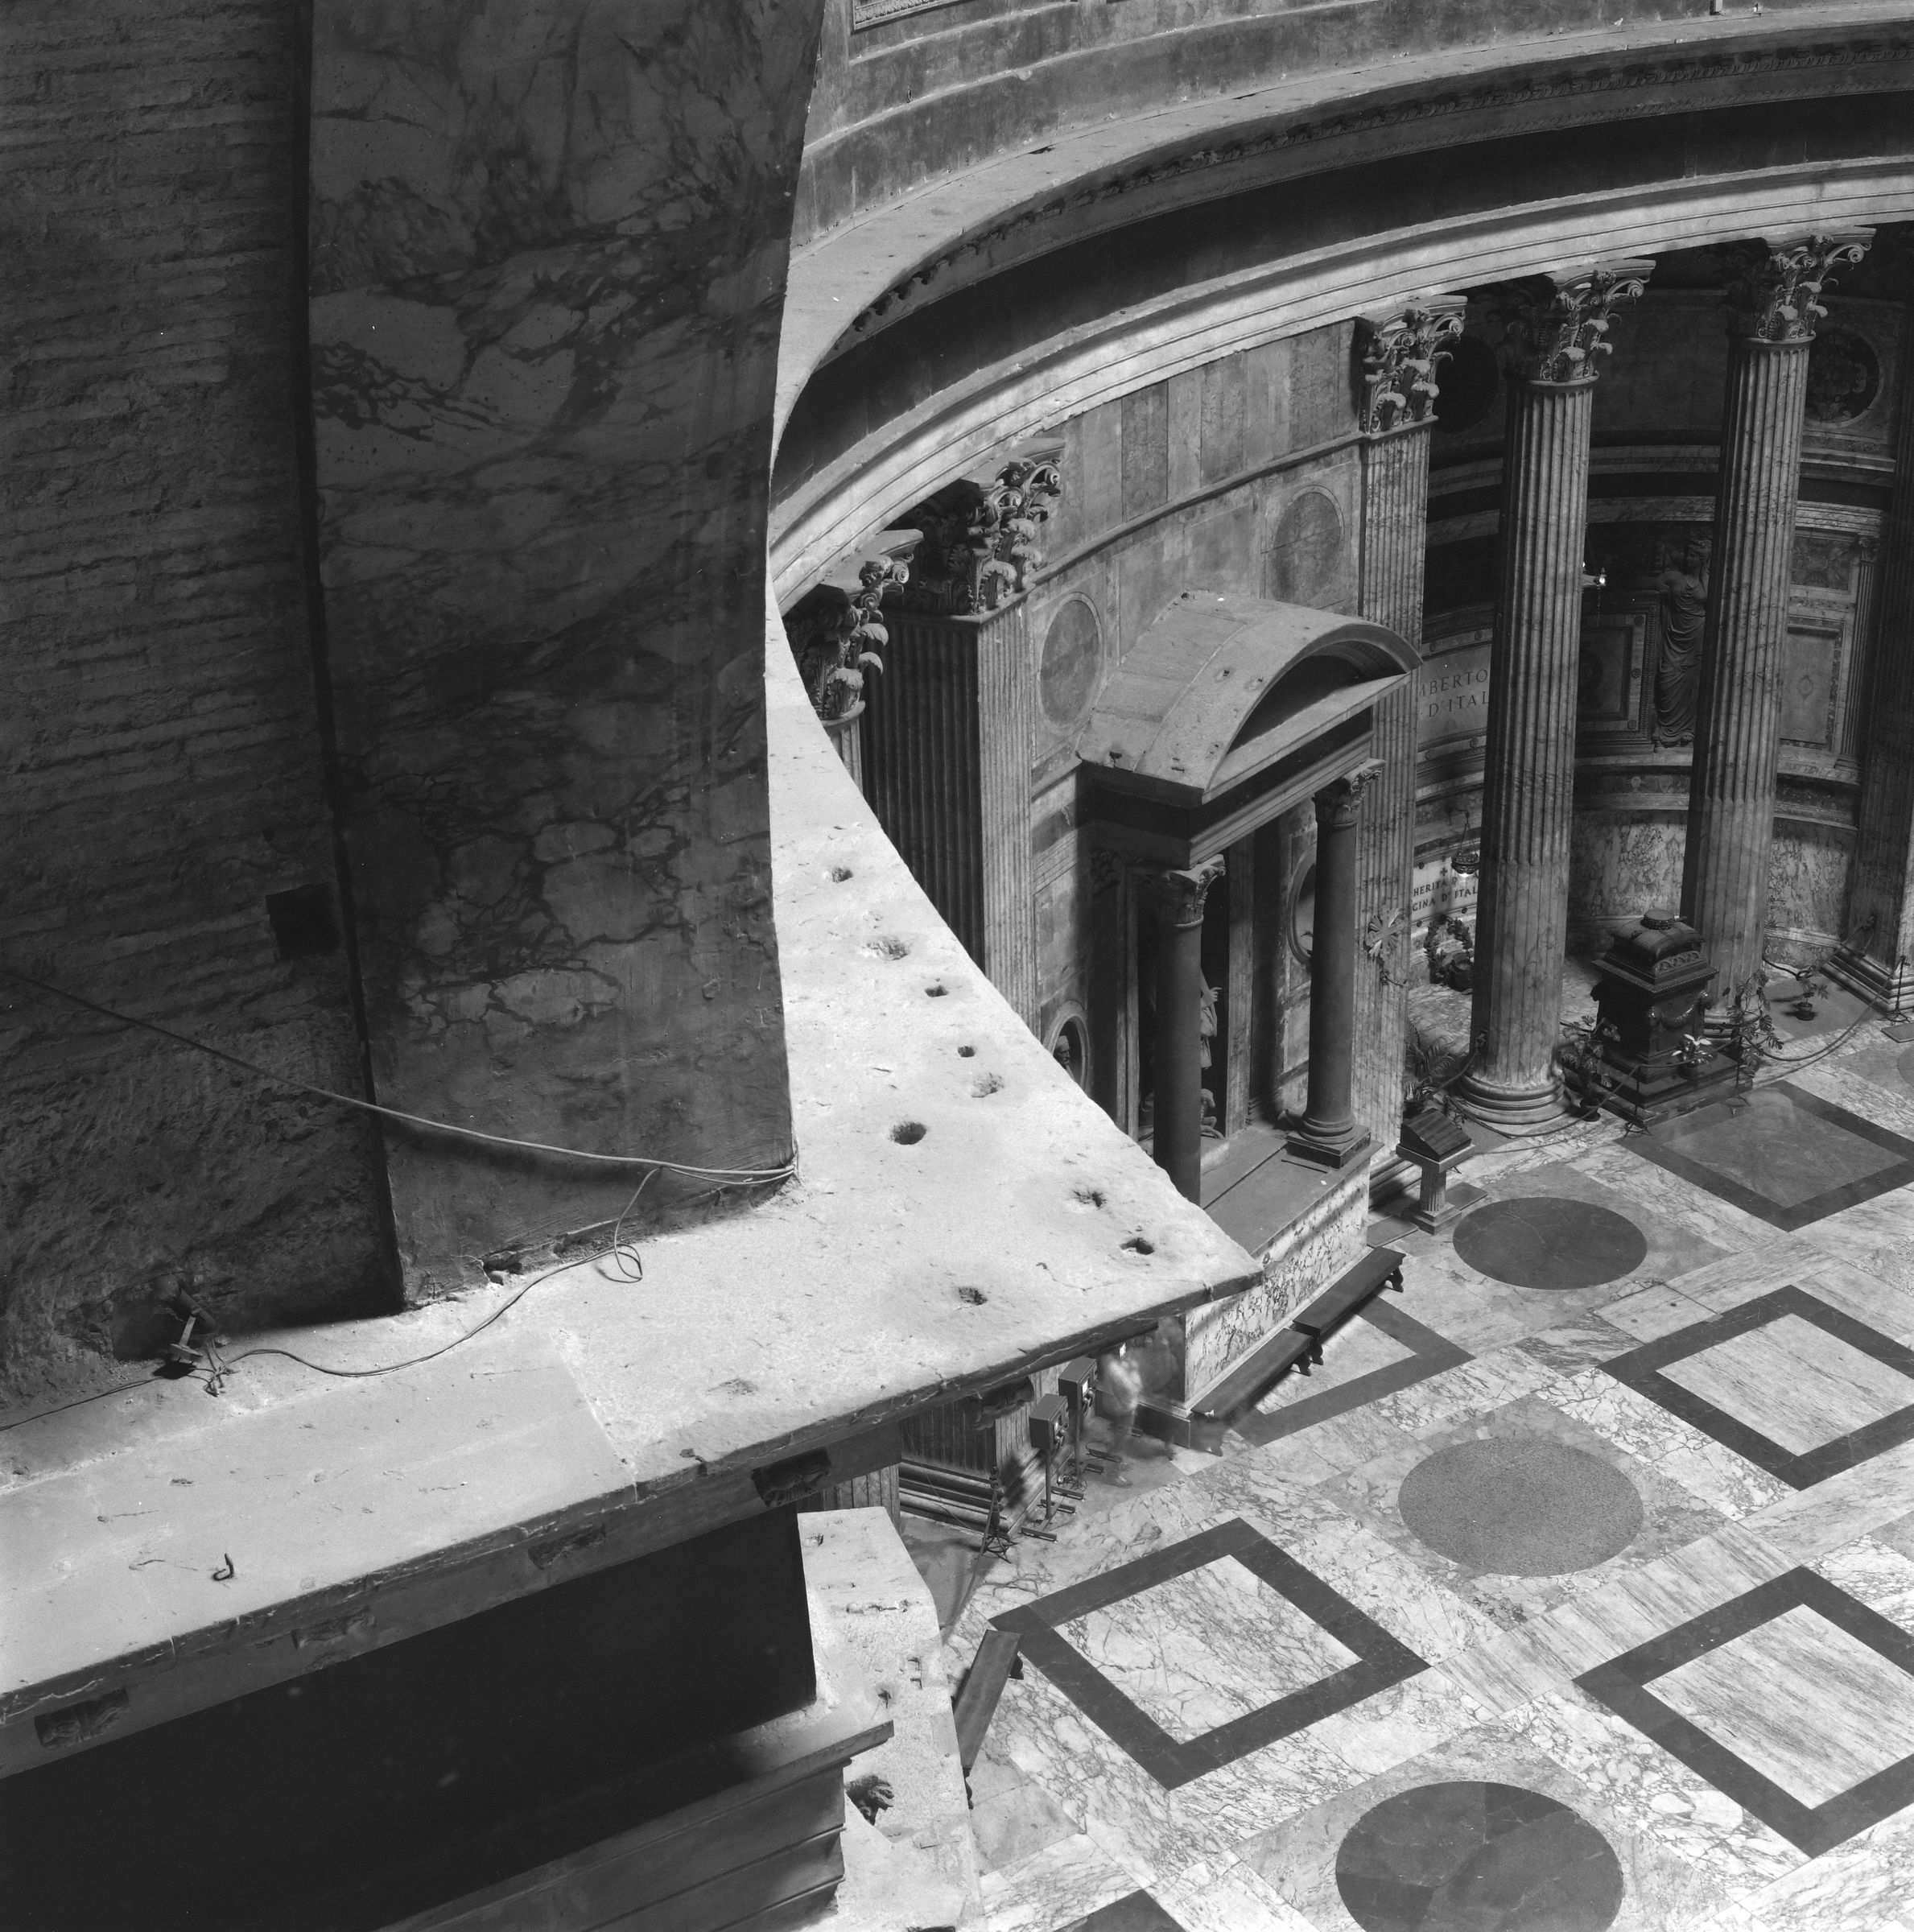 Fotografo non identificato, Pantheon,1951-2000, gelatina ai sali d'argento, 6x6 cm, N078251